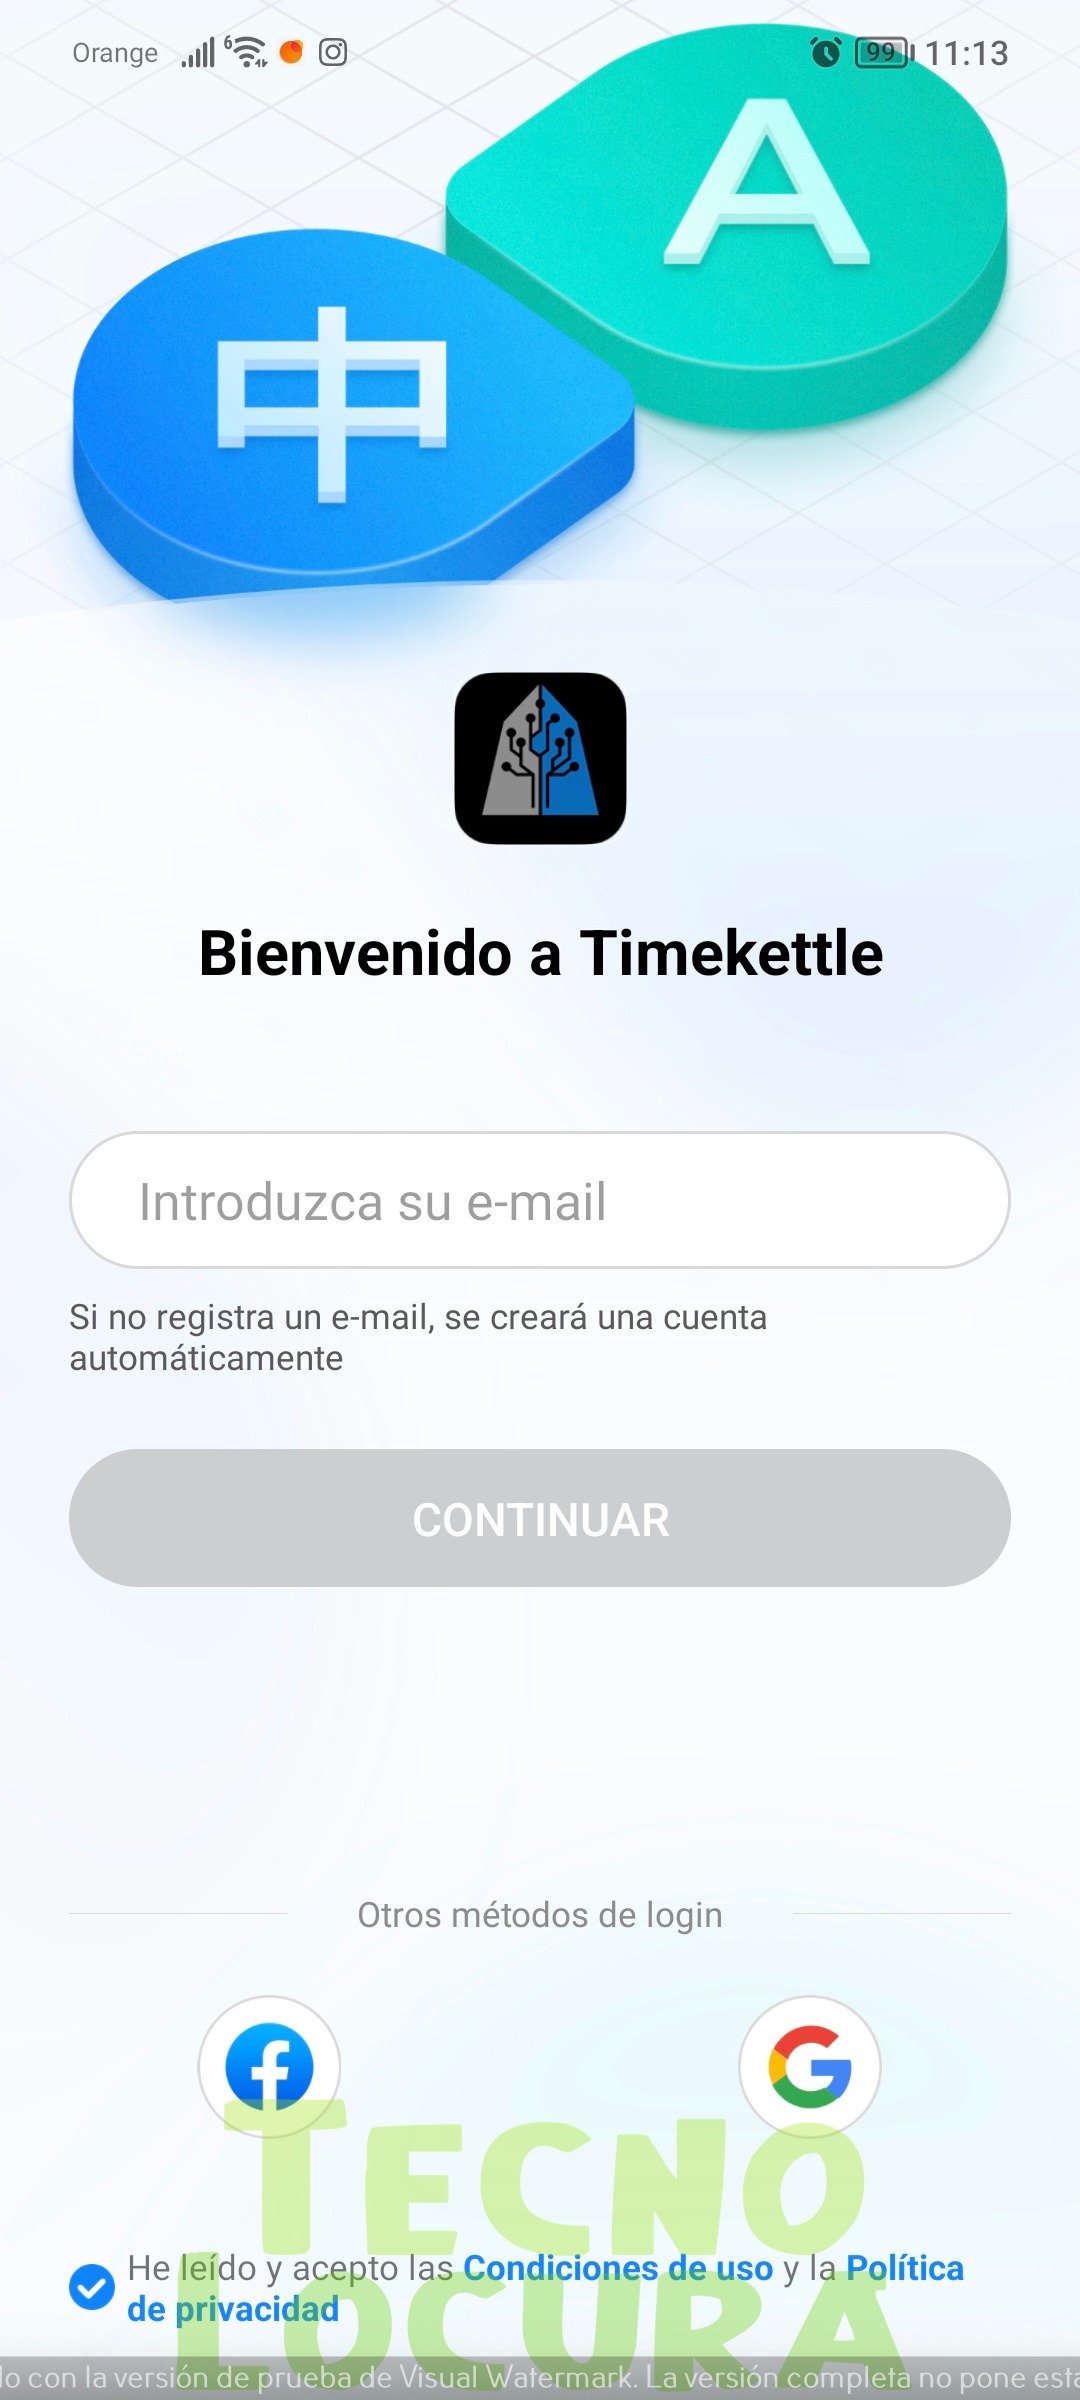 Timekettle APP - TecnoLocura